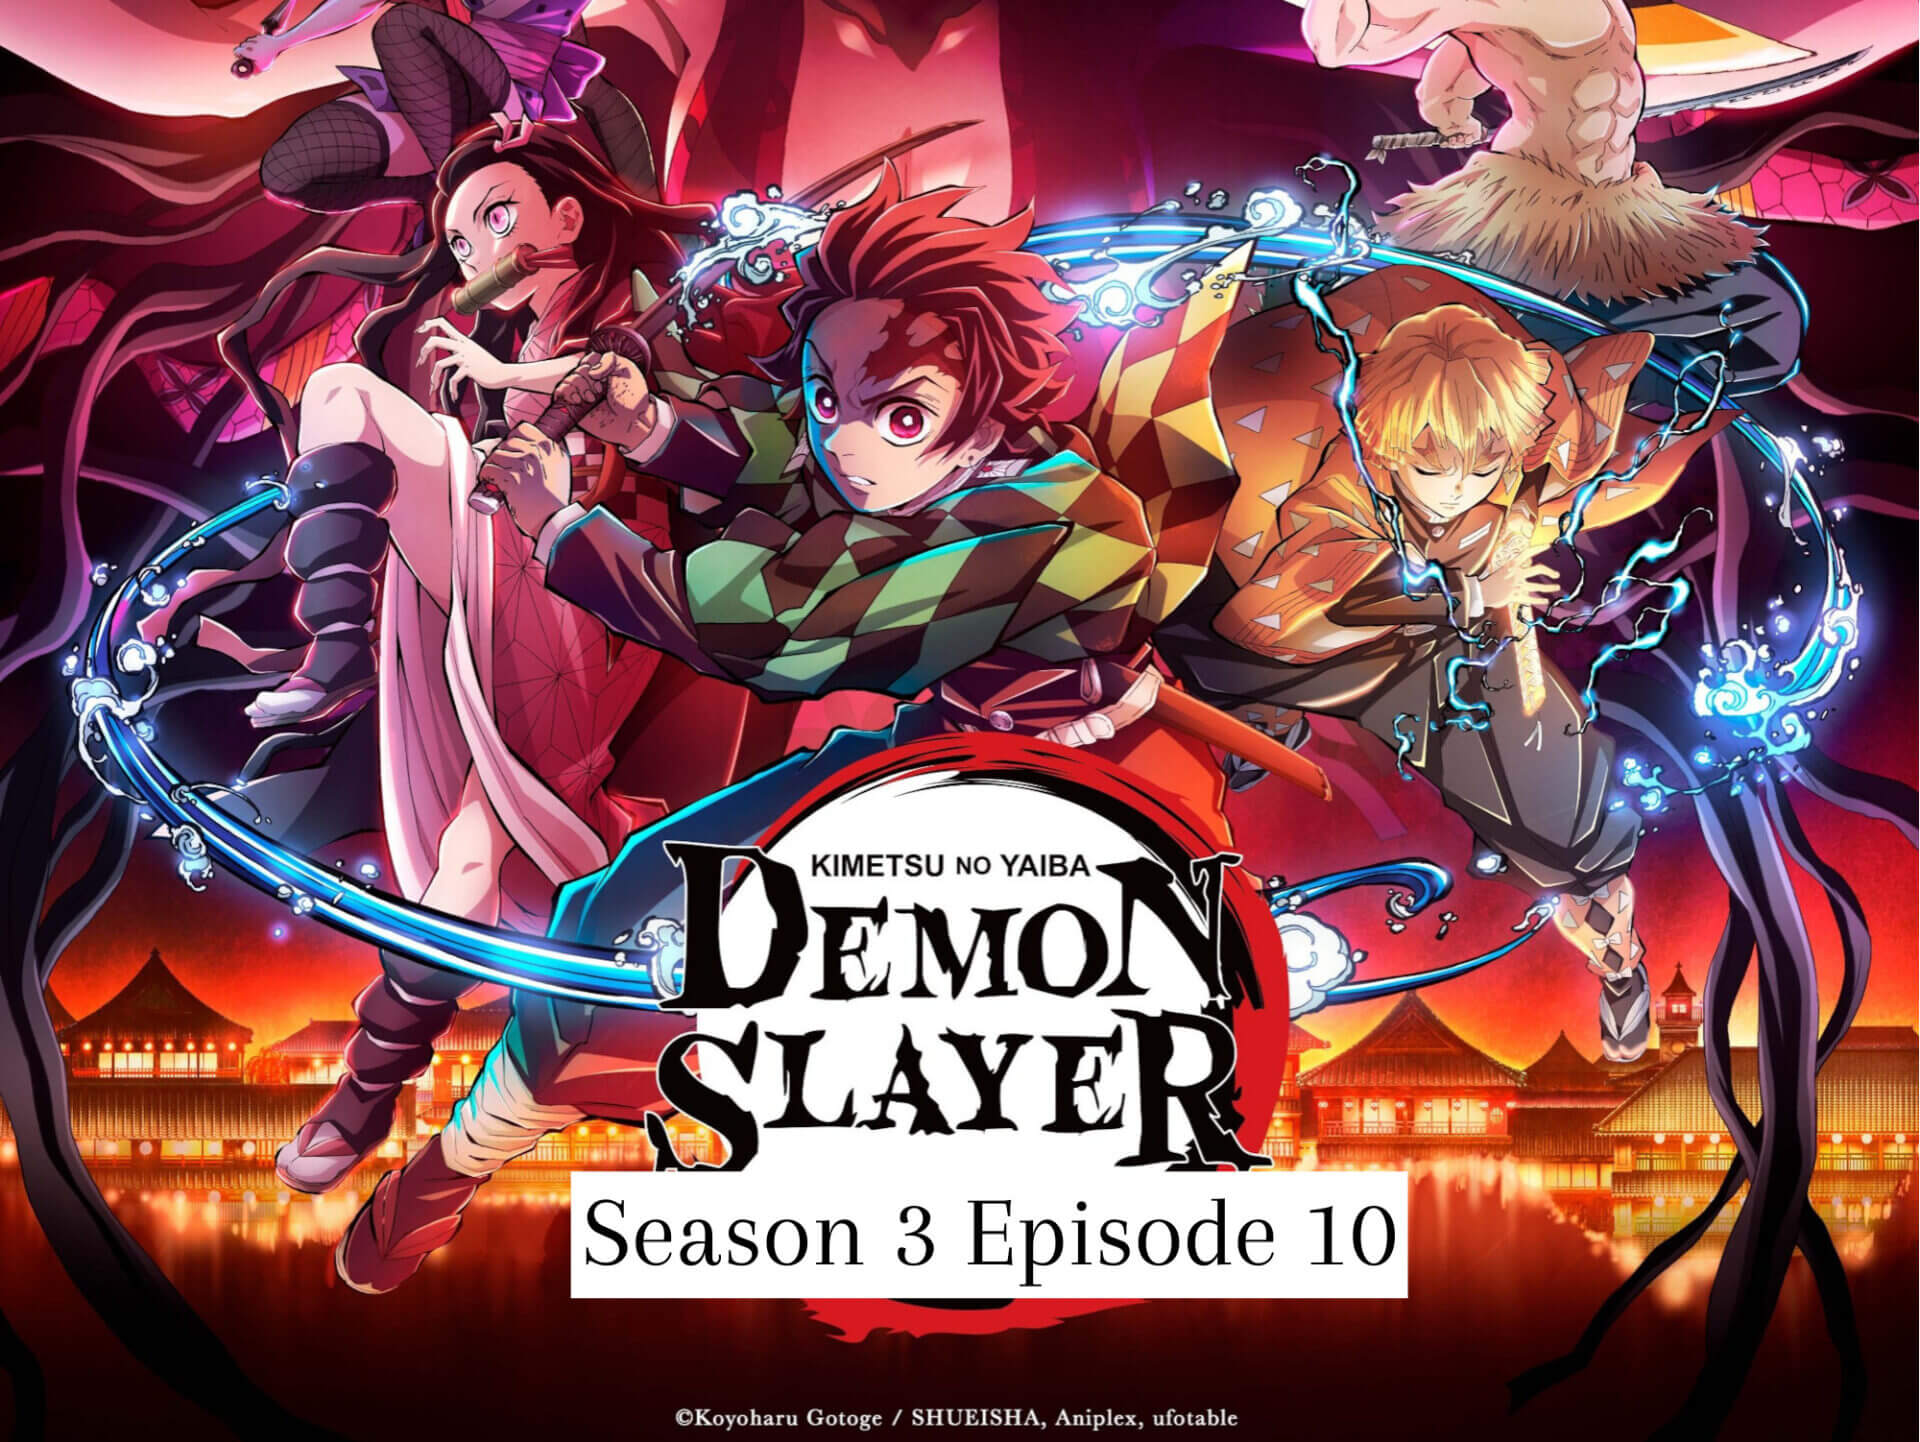 Demon Slayer Season 3 Episode 10 release date